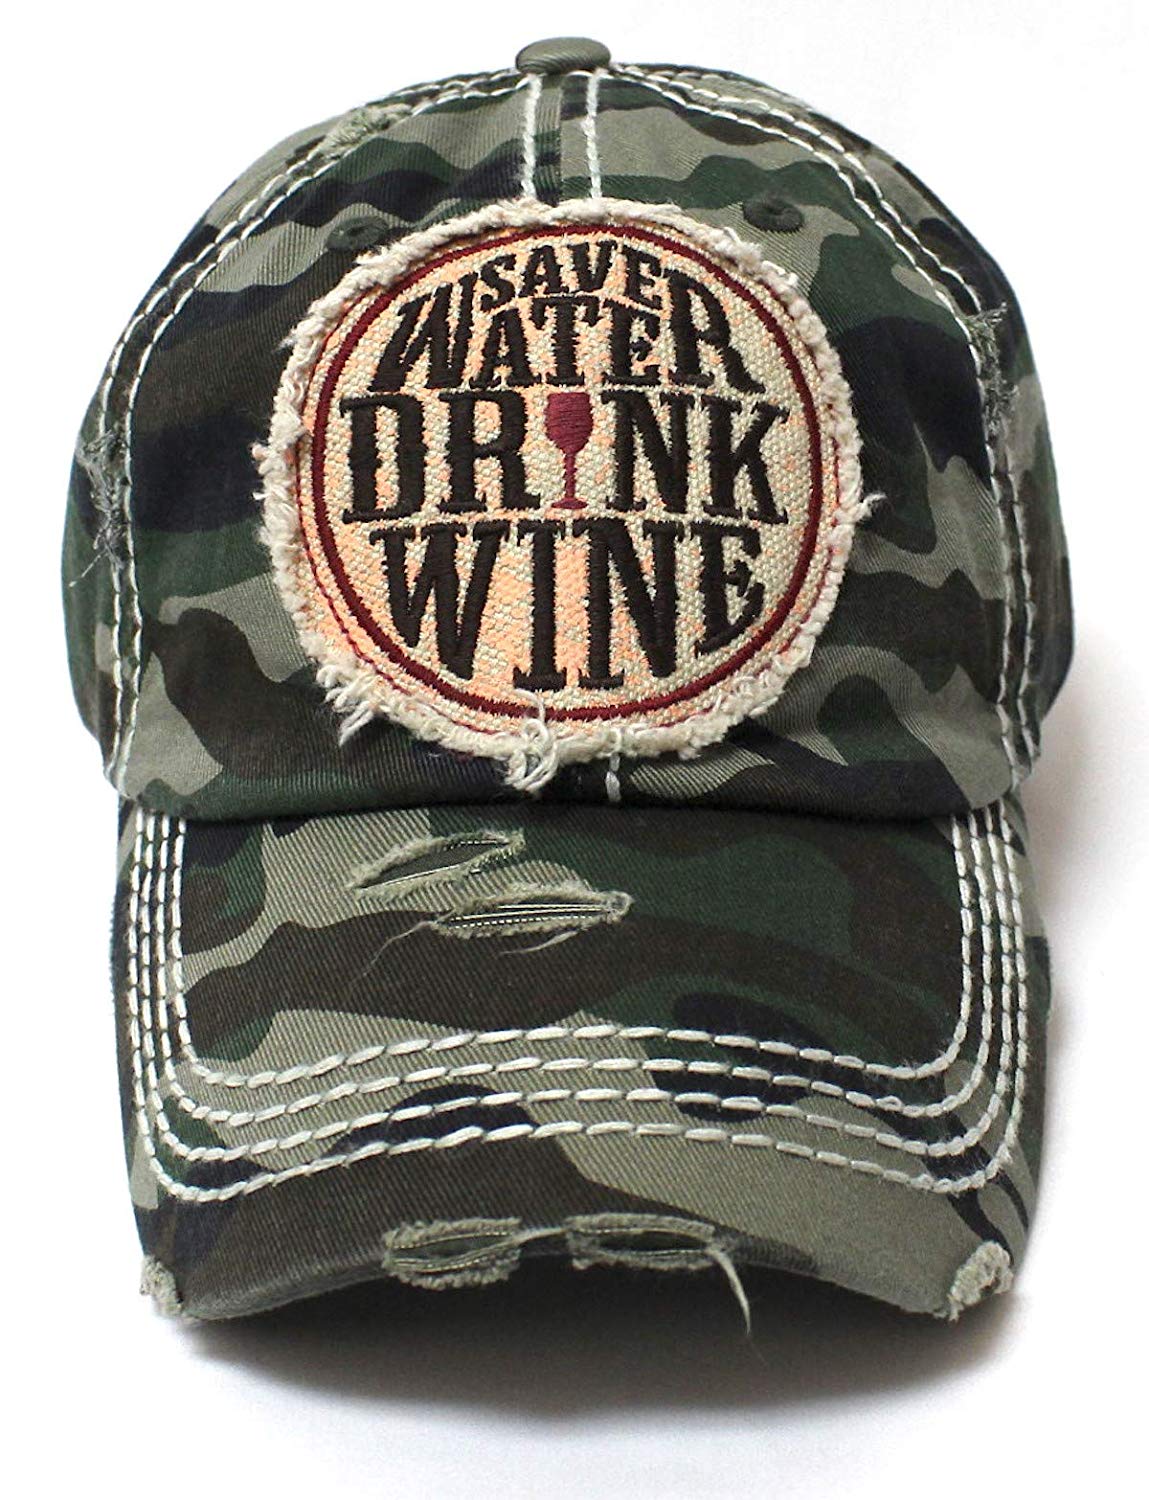 CAPS 'N VINTAGE Women's Patch Embroidery Baseball Cap Save Water Drink Wine - Caps 'N Vintage 